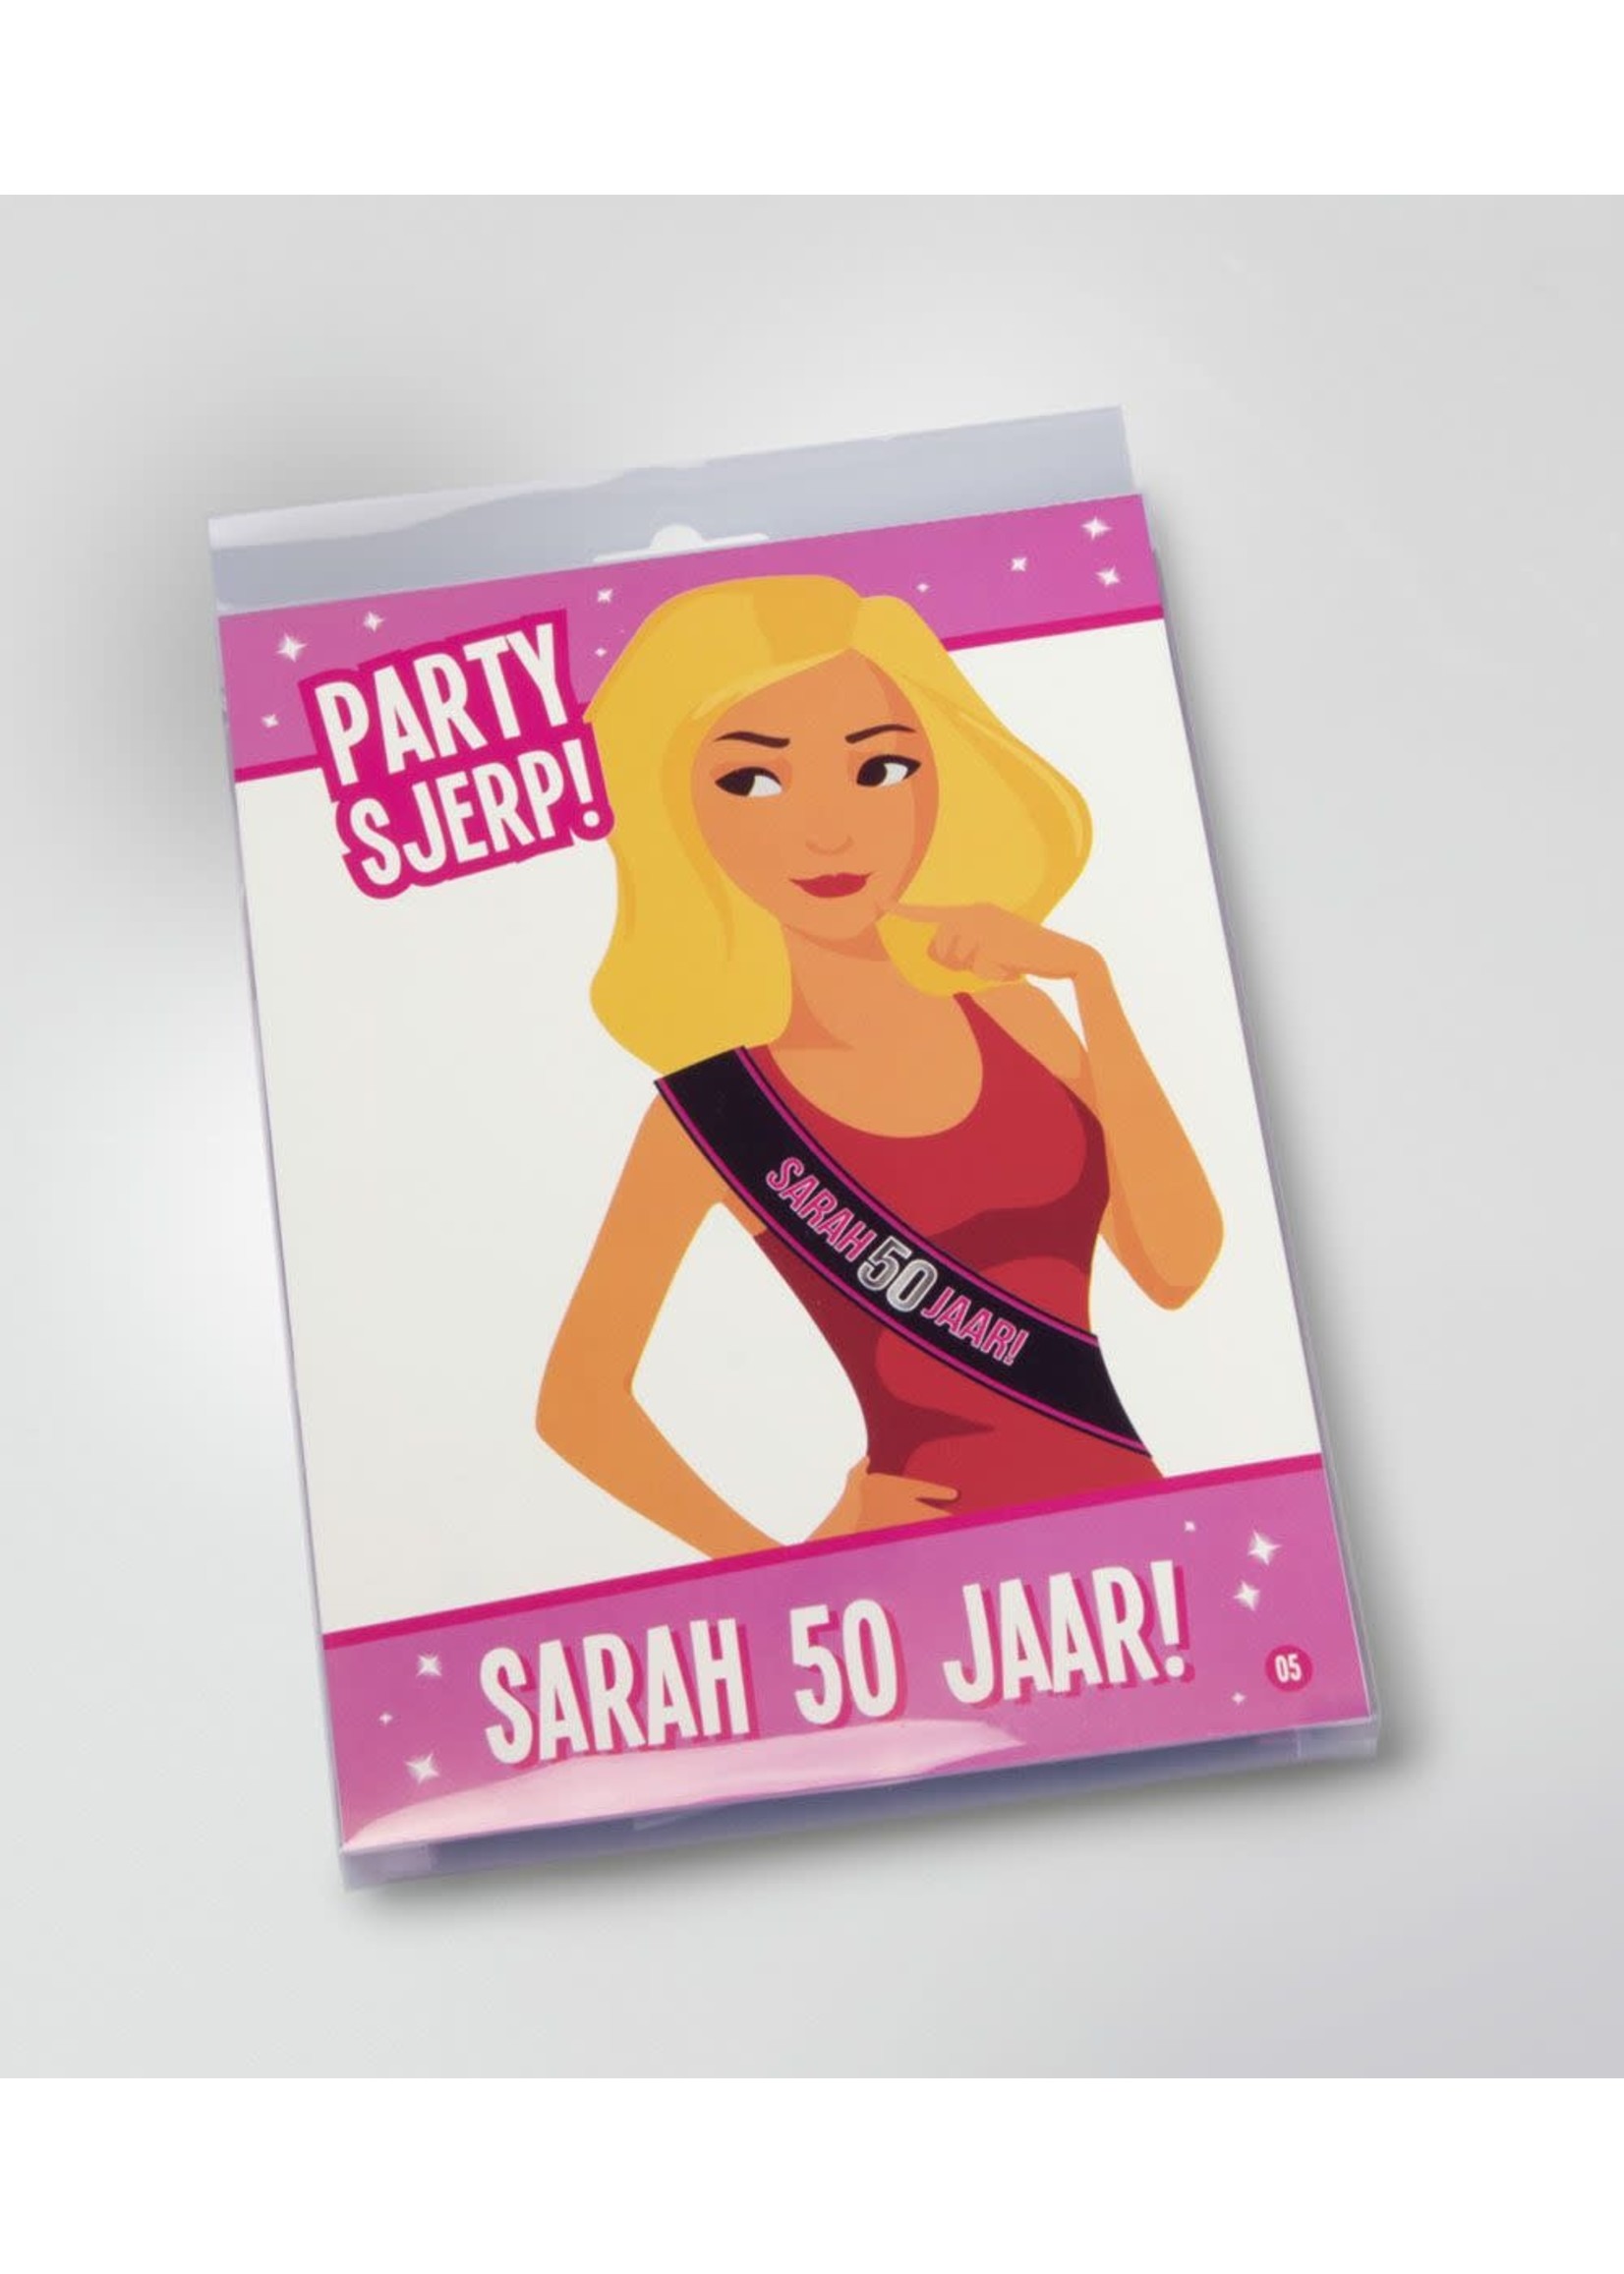 Sarah sjerp 50 jaar